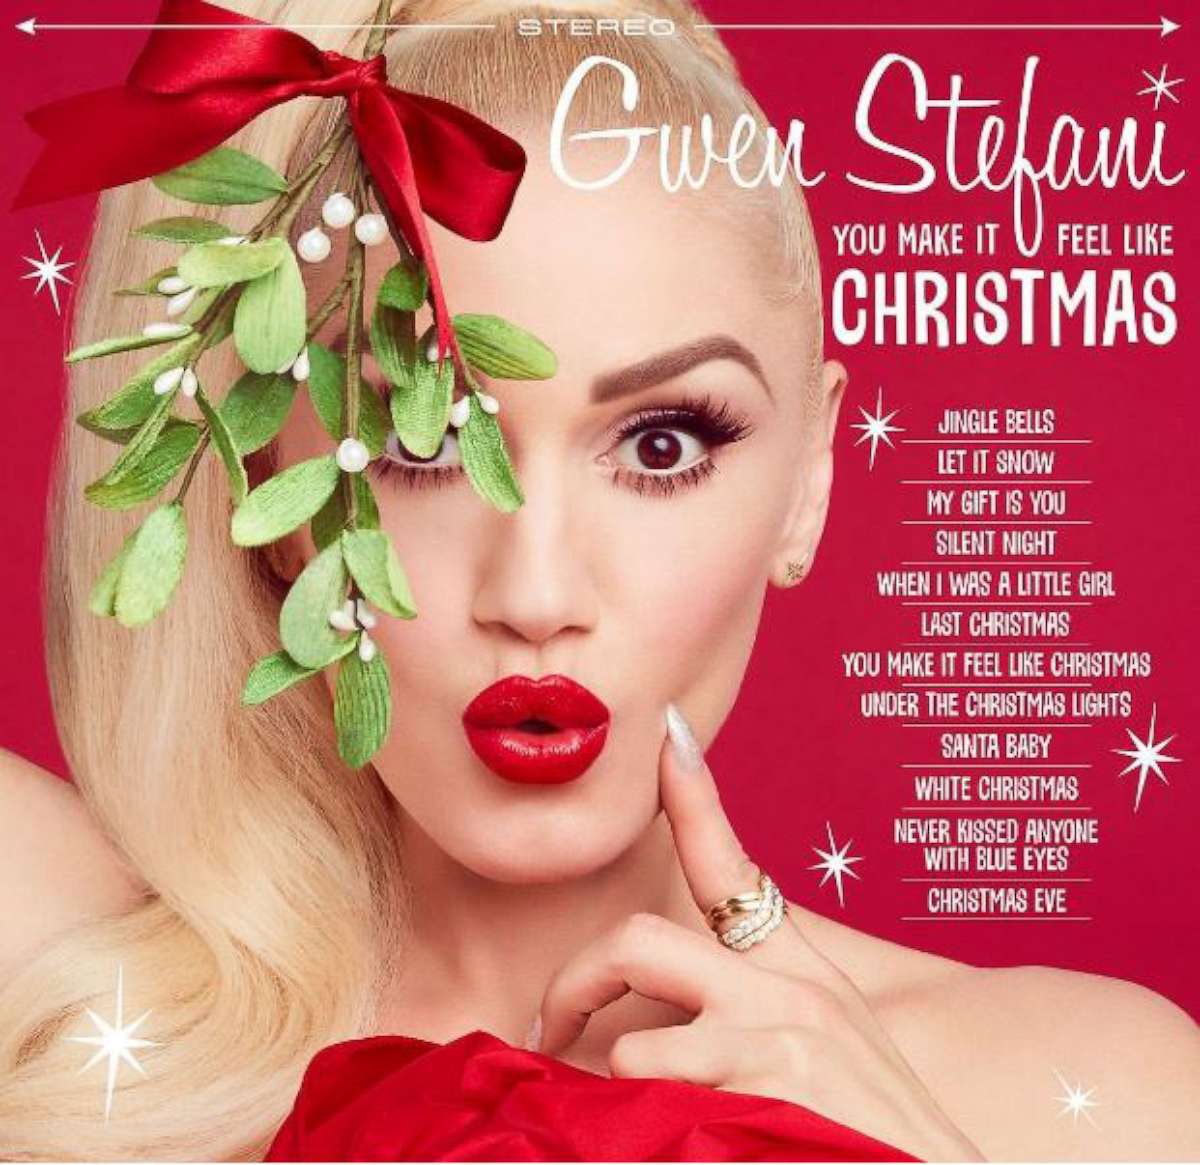 PHOTO: Gwen Stefani - "You Make it Feel Like Christmas"